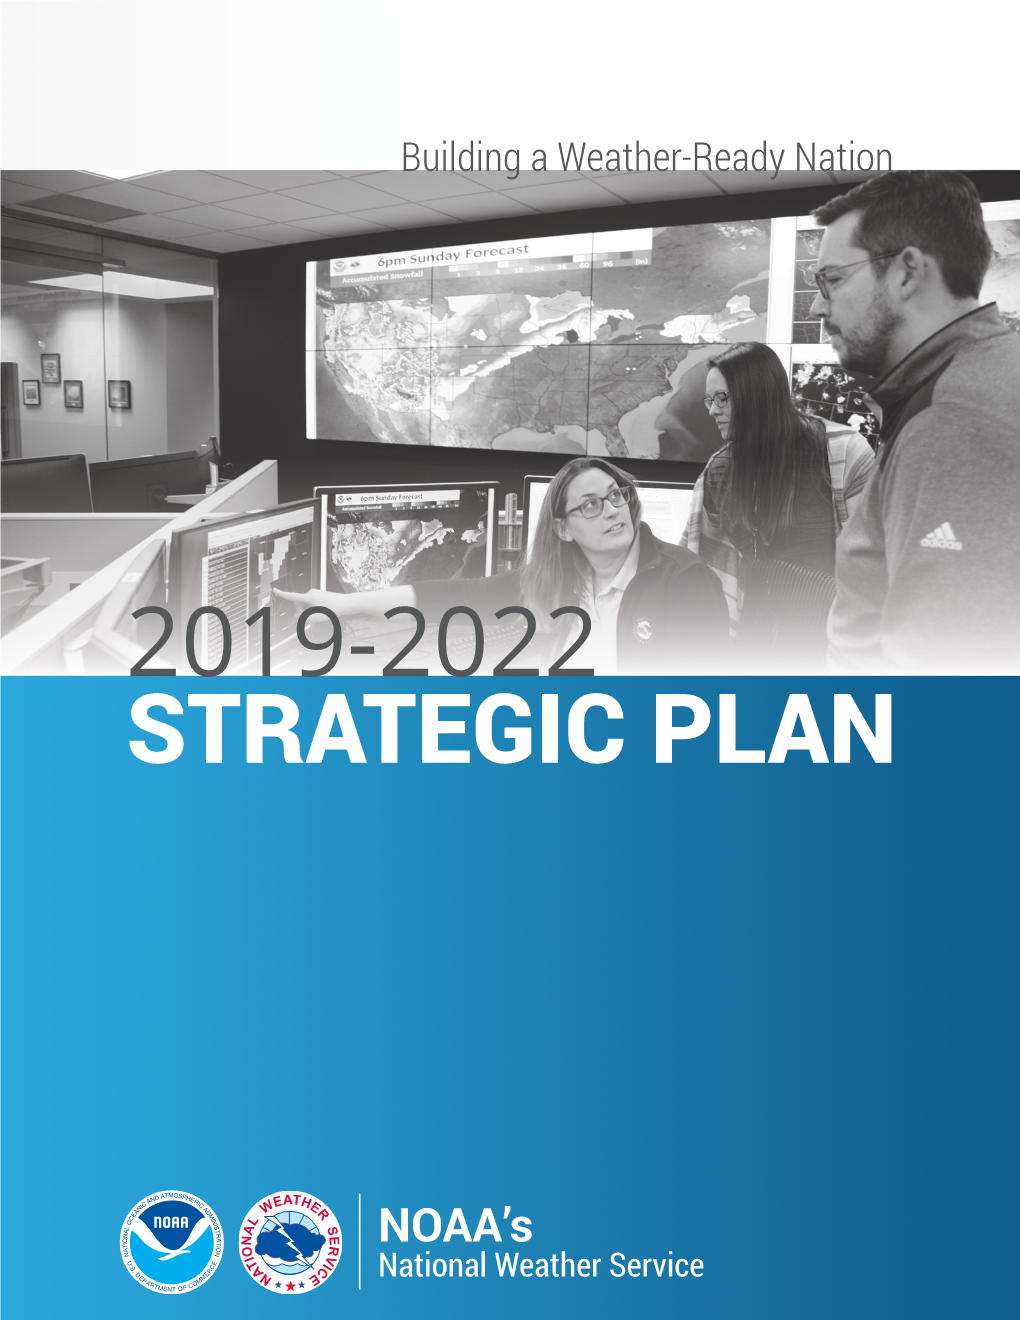 NWS 2019-2022 Strategic Plan